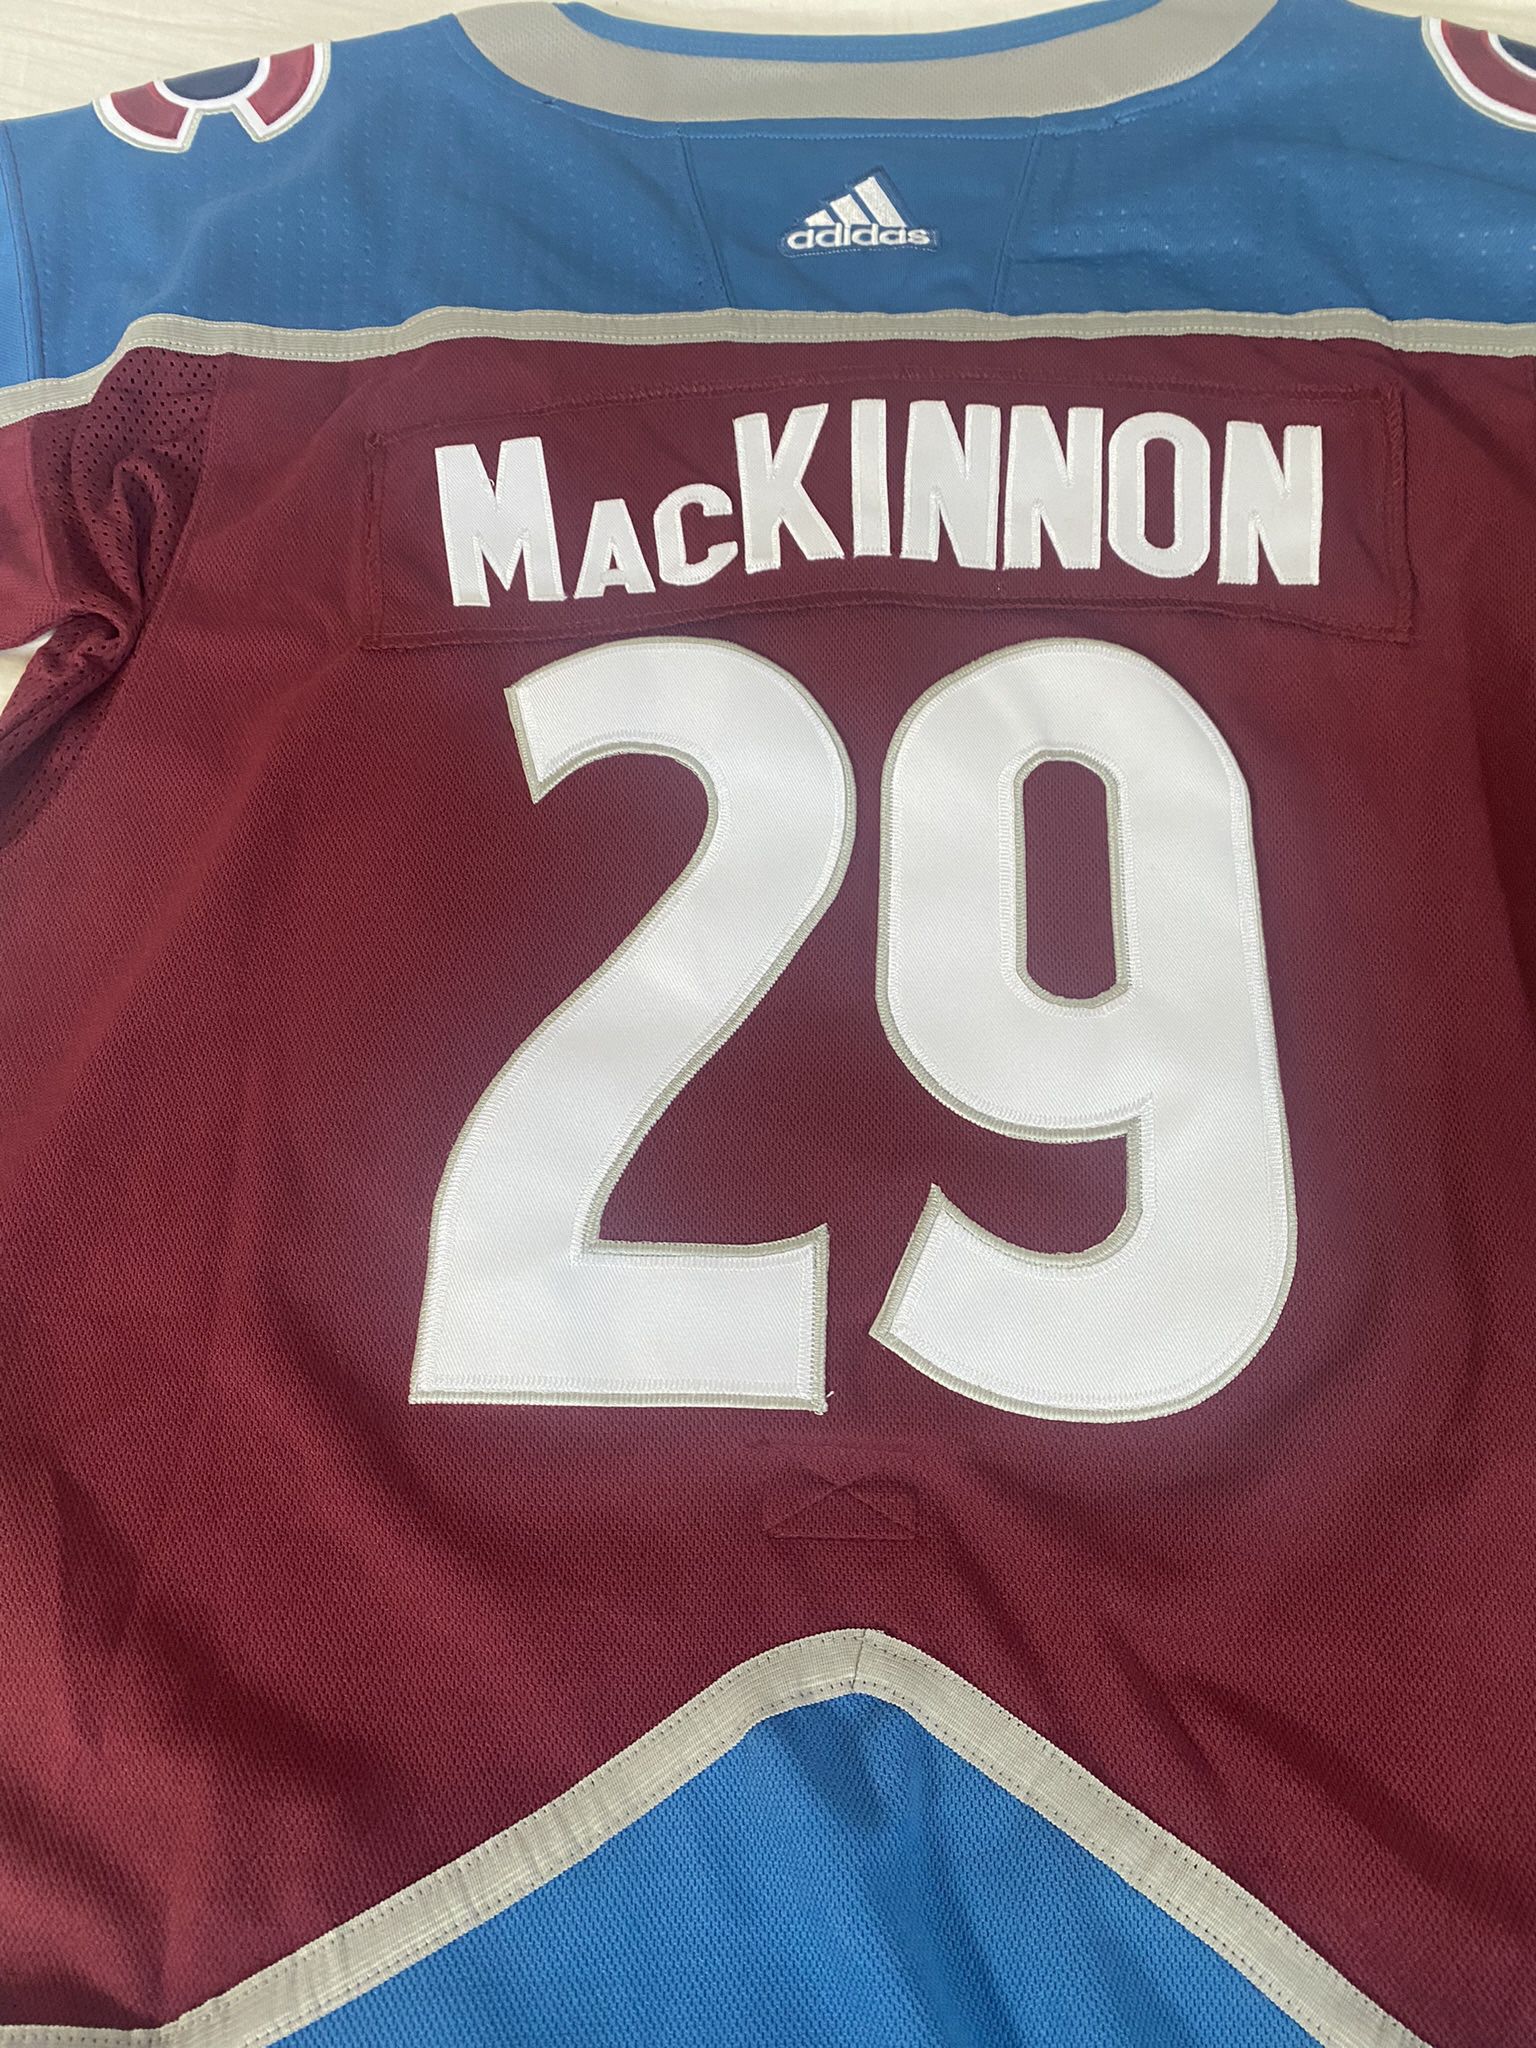 Colorado Avalanche jerseys # 29 MacKinnon  Sizes 52Up To Size 60 